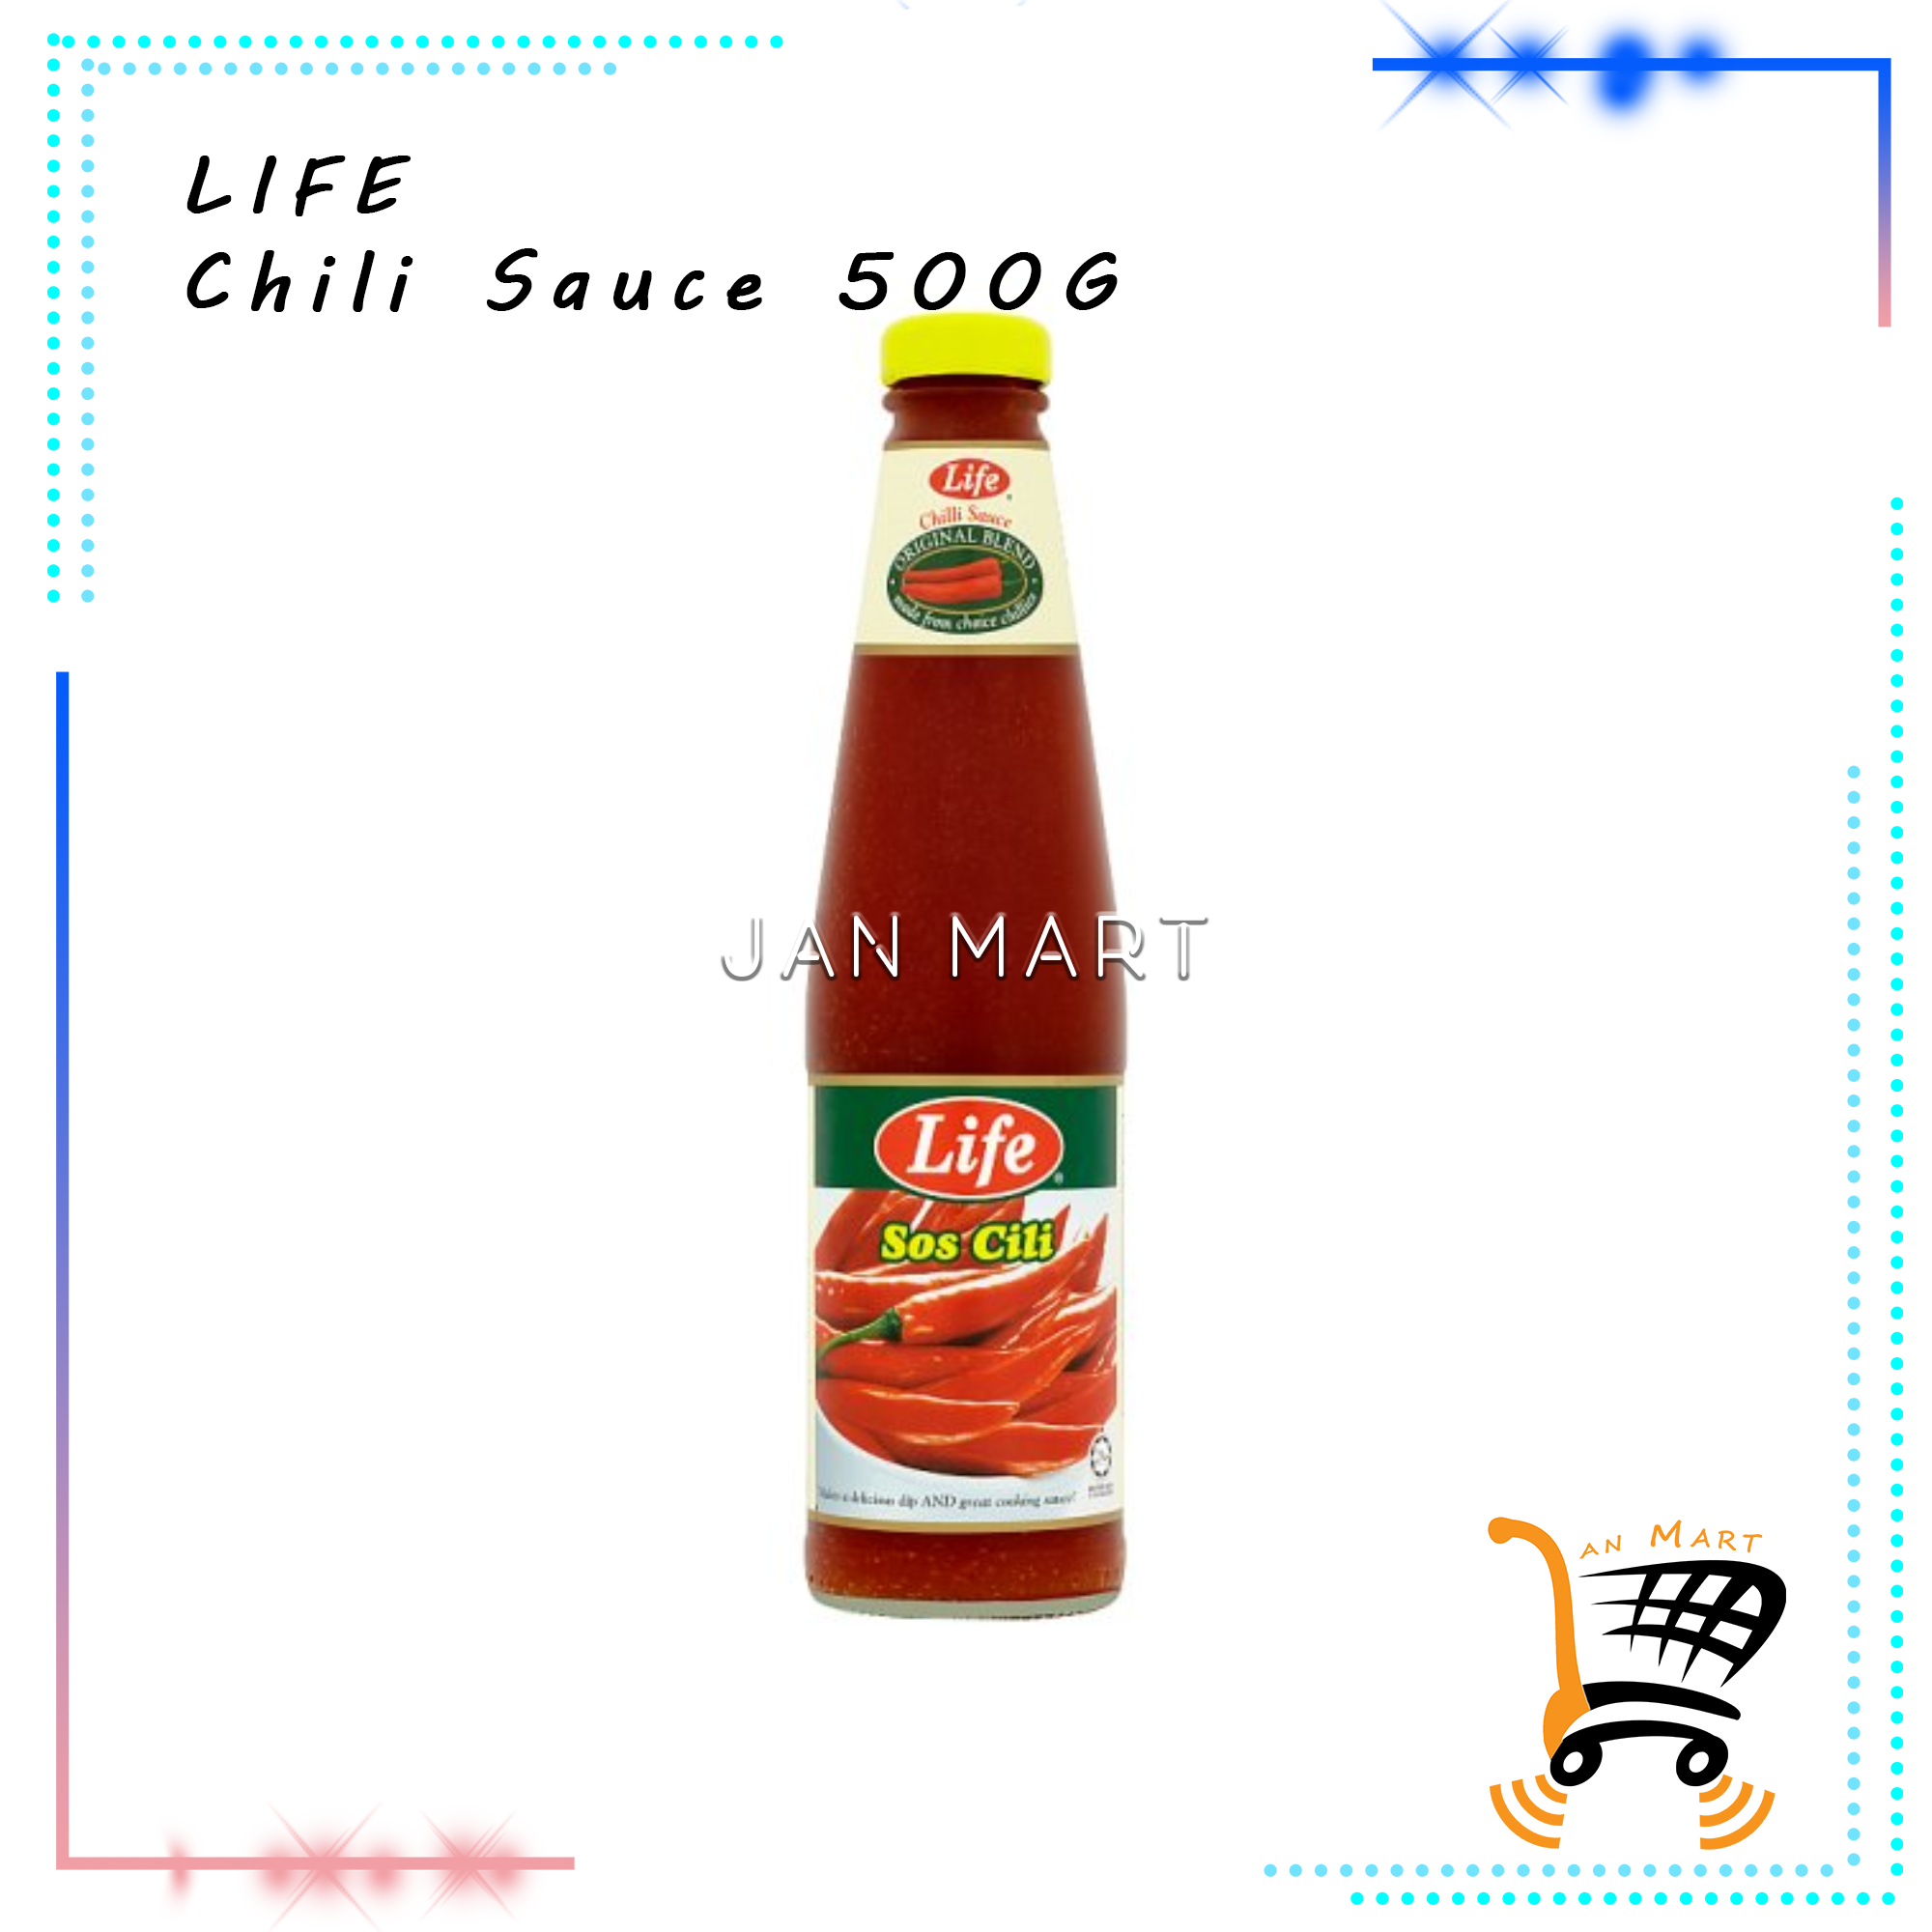 LIFE Chili Sauce 500G